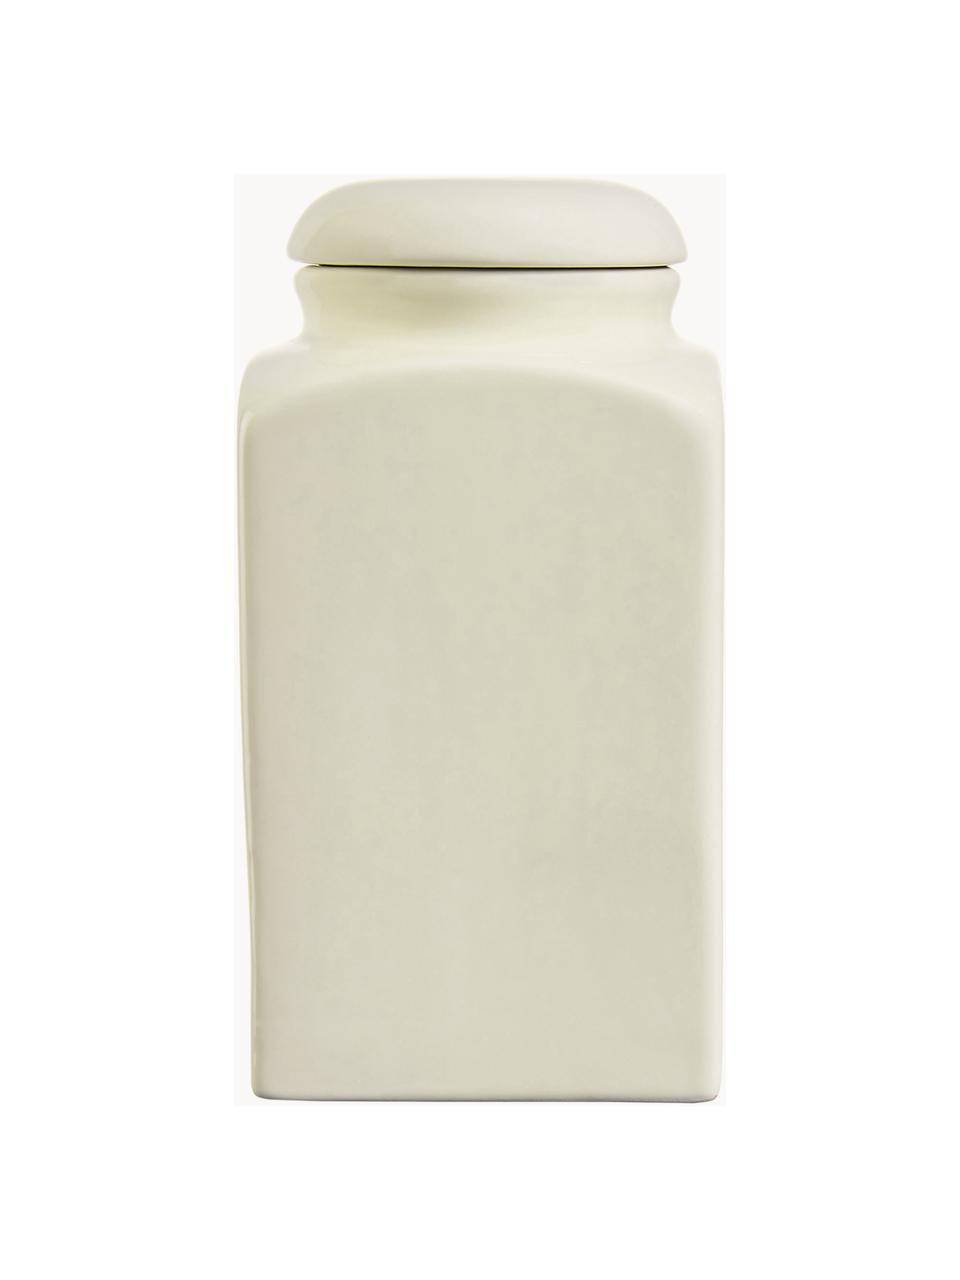 Bote Mrs Winterbottoms Salt, Gres, Blanco crema, negro, Ø 11 x Al 21 cm